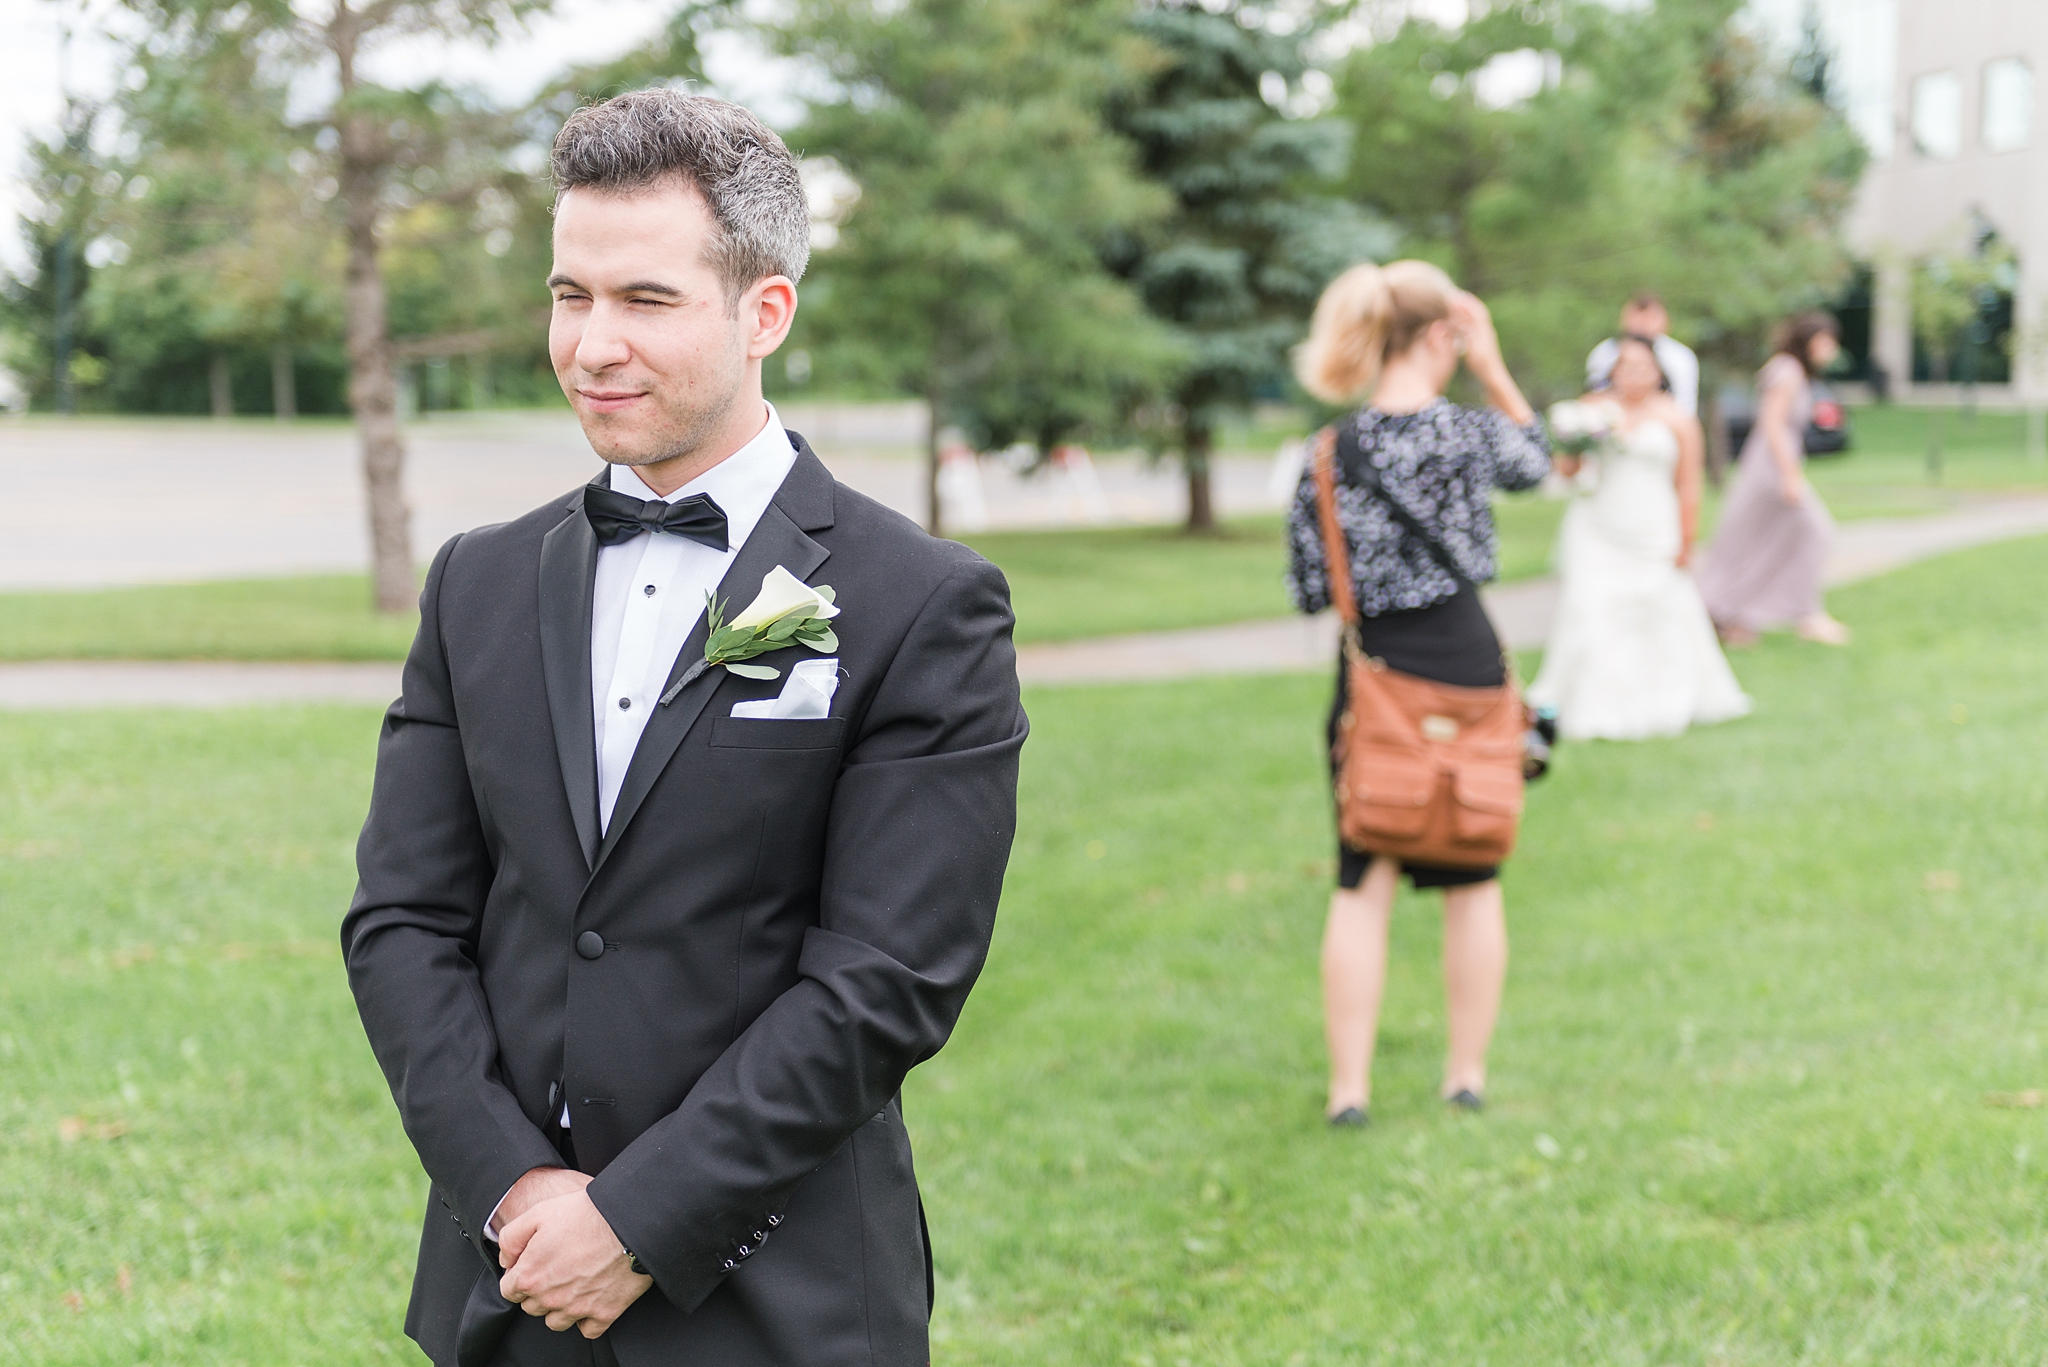 Ottawa wedding pgotographer bts 0003